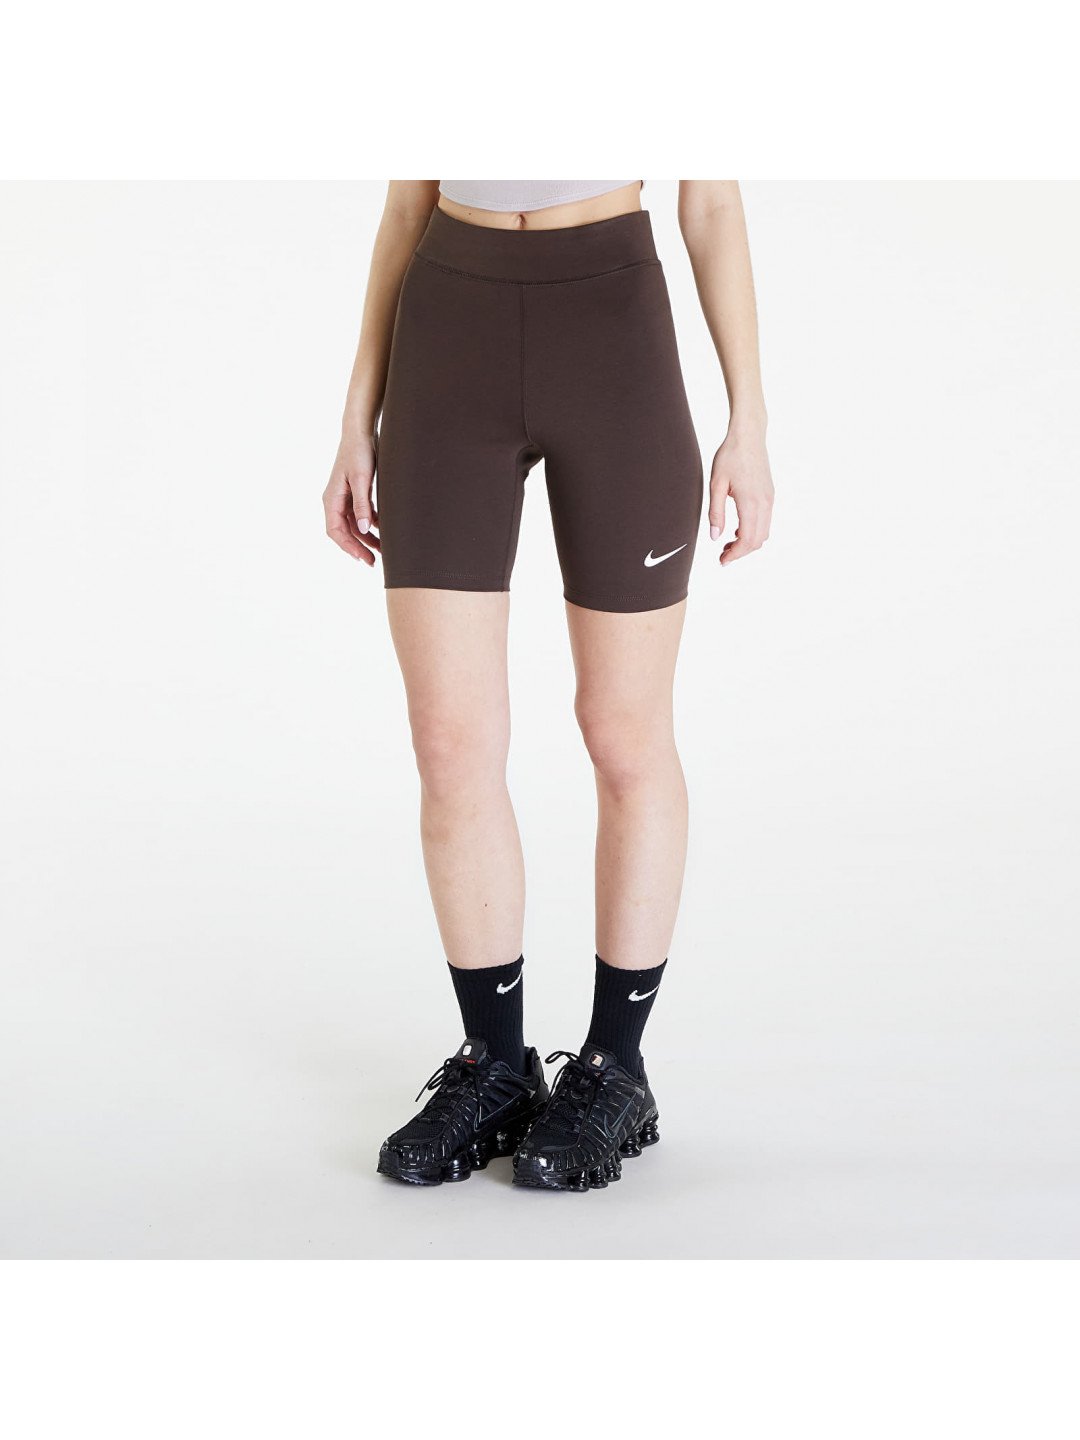 Nike Sportswear Classics Women s High-Waisted 8 quot Biker Shorts Baroque Brown Sail